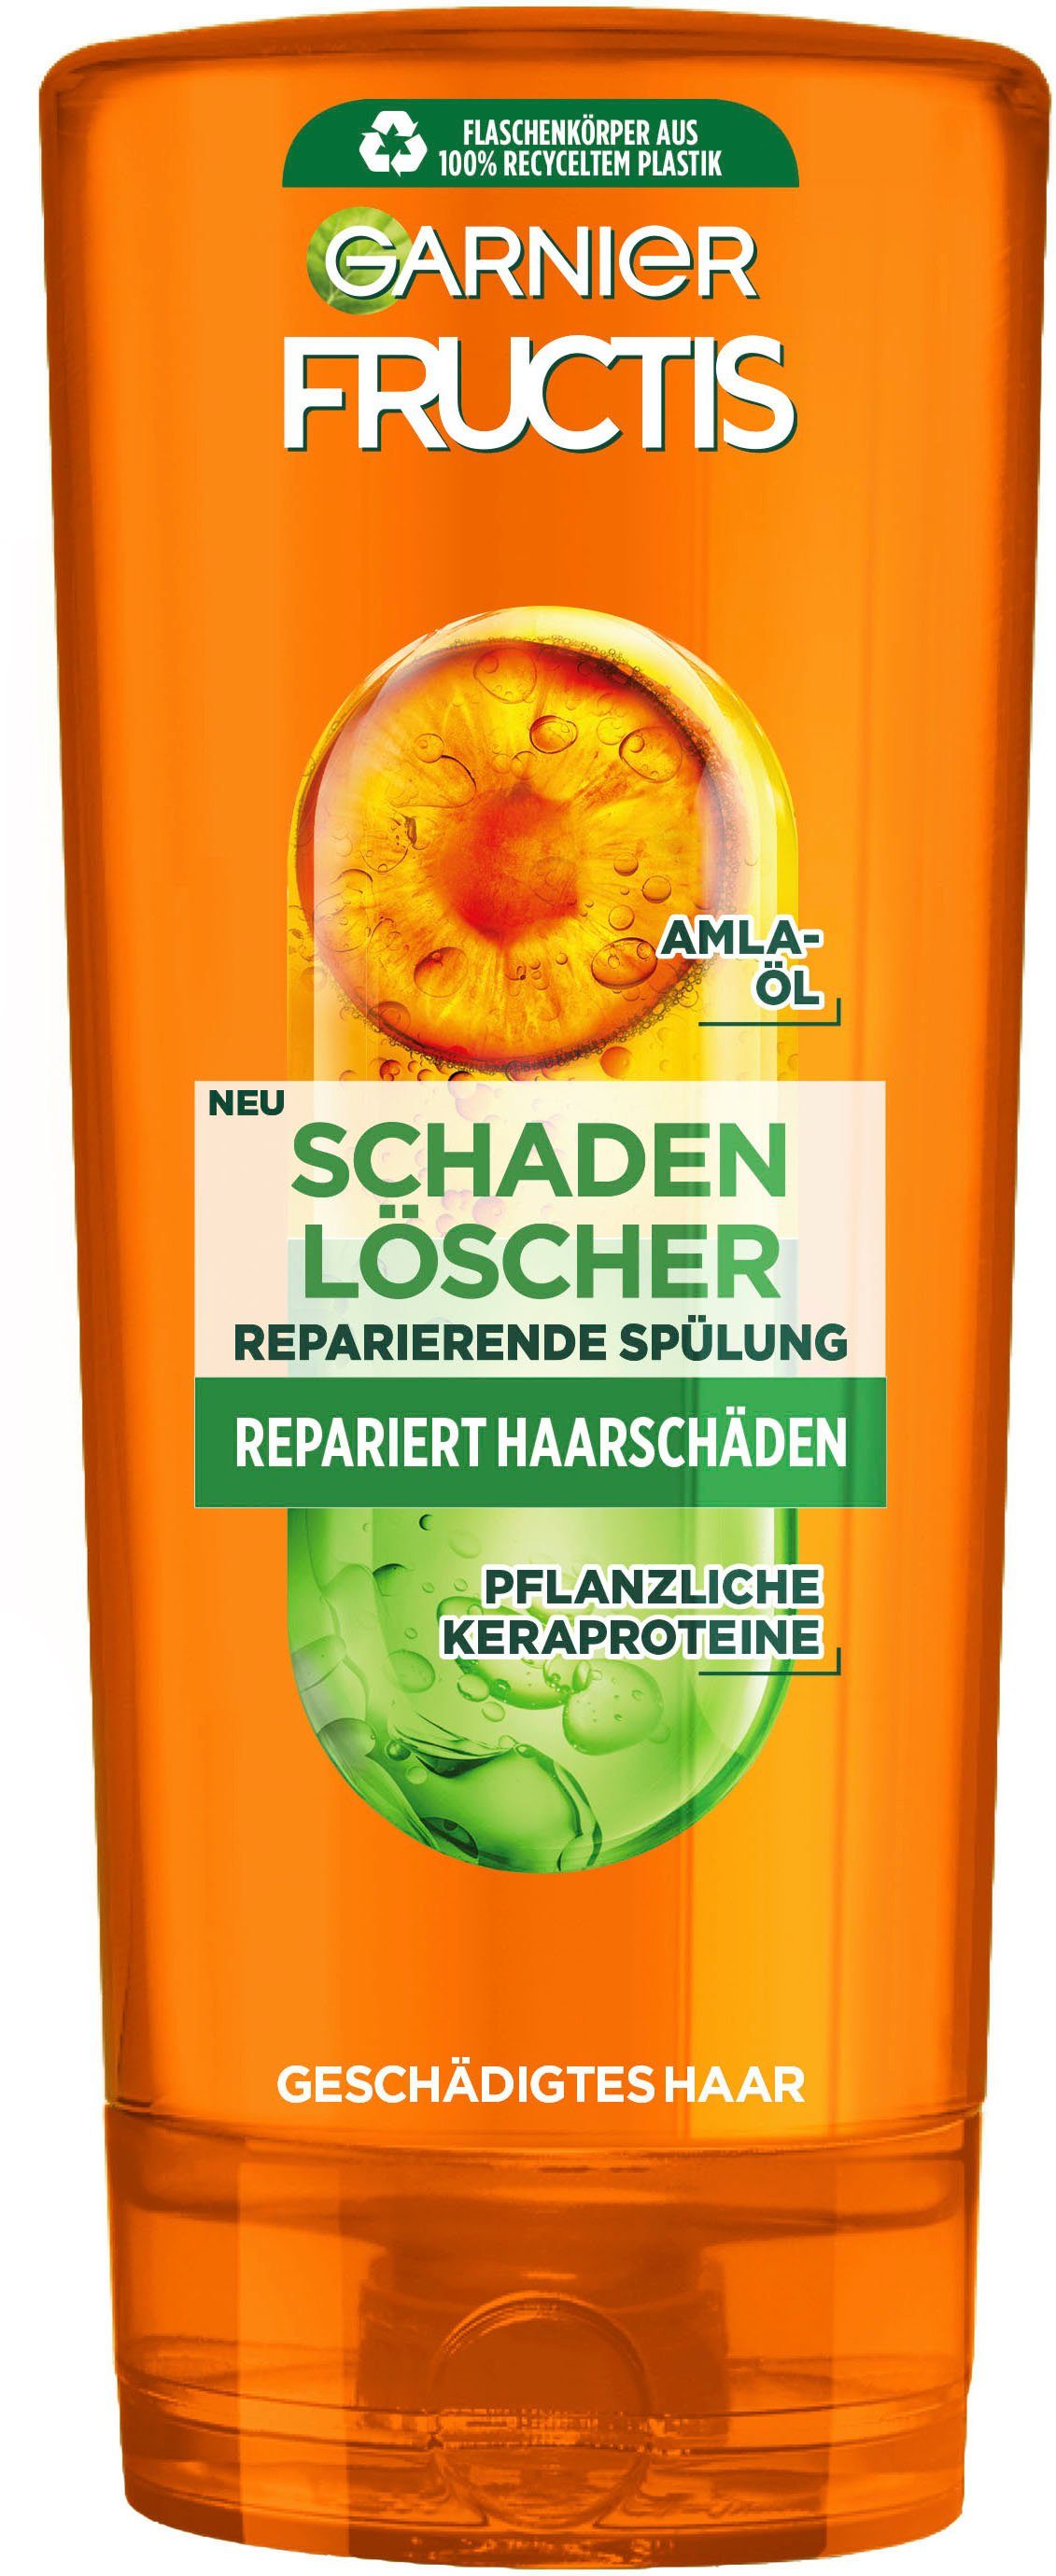 Fructis Haarspülung Garnier Spülung, 6-tlg. Schadenlöscher Set, GARNIER